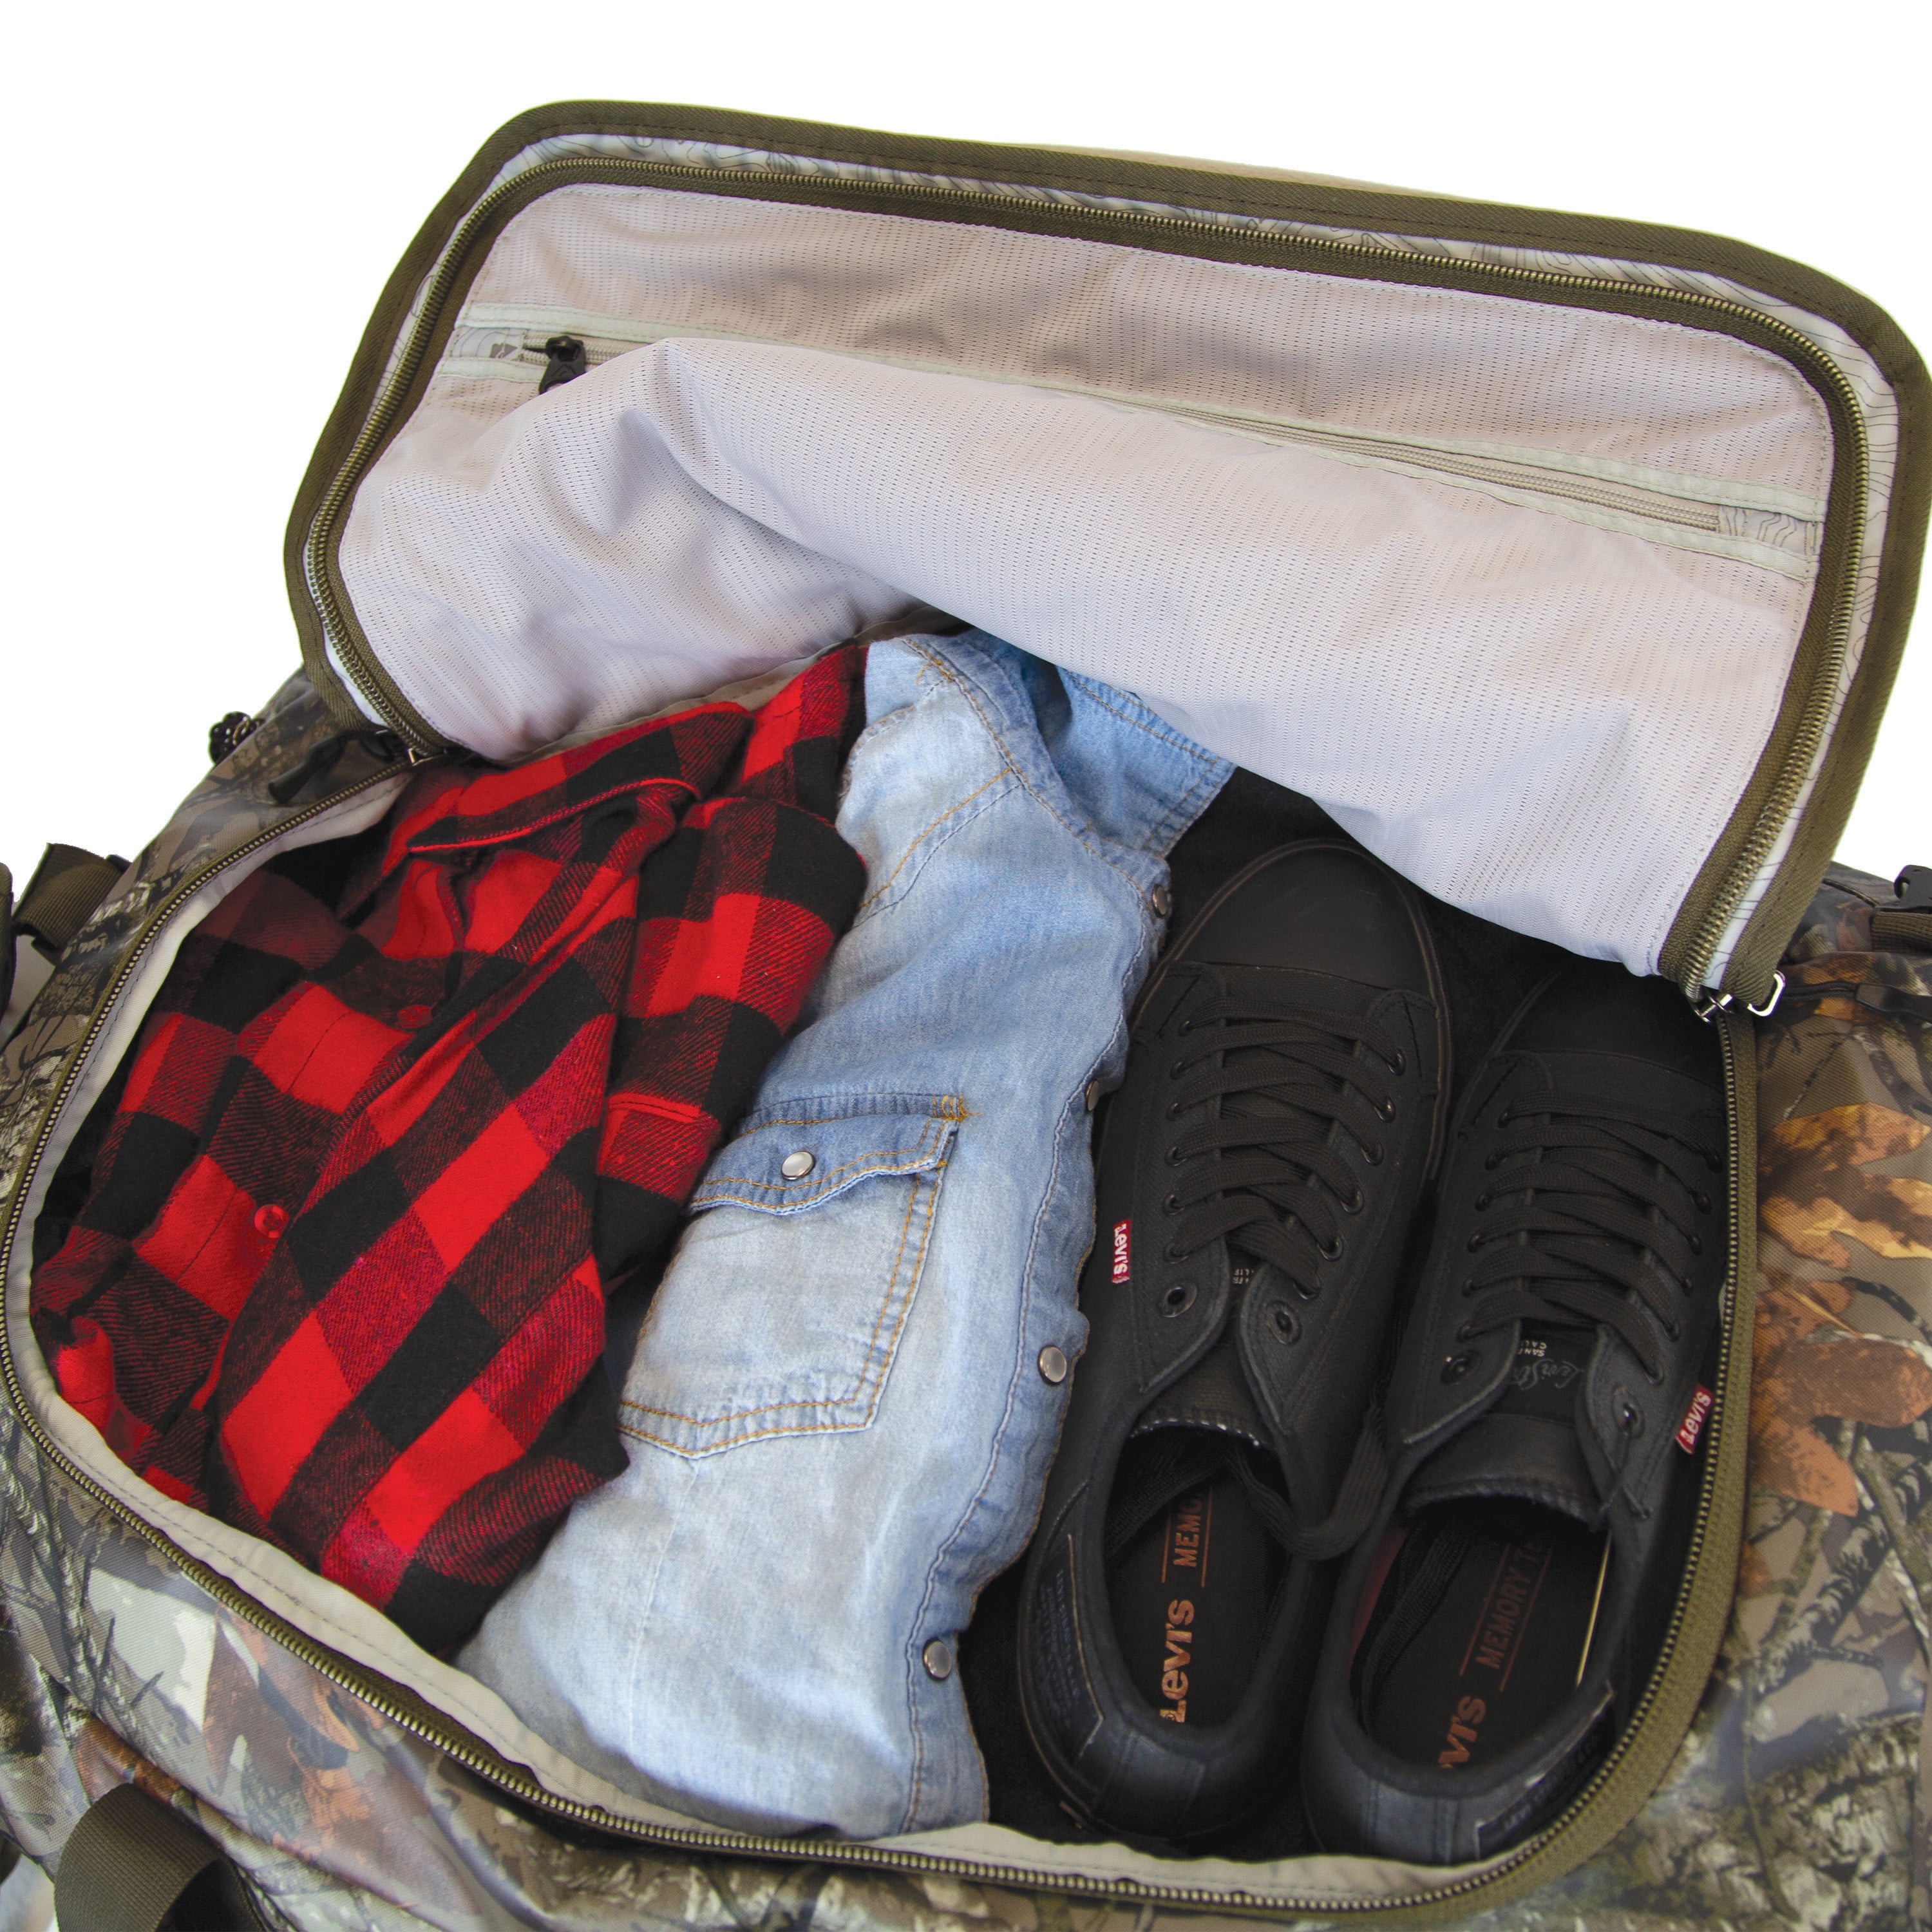 Afoxsos 90L Orange Nylon Camping Backpack Waterproof Travel Bag